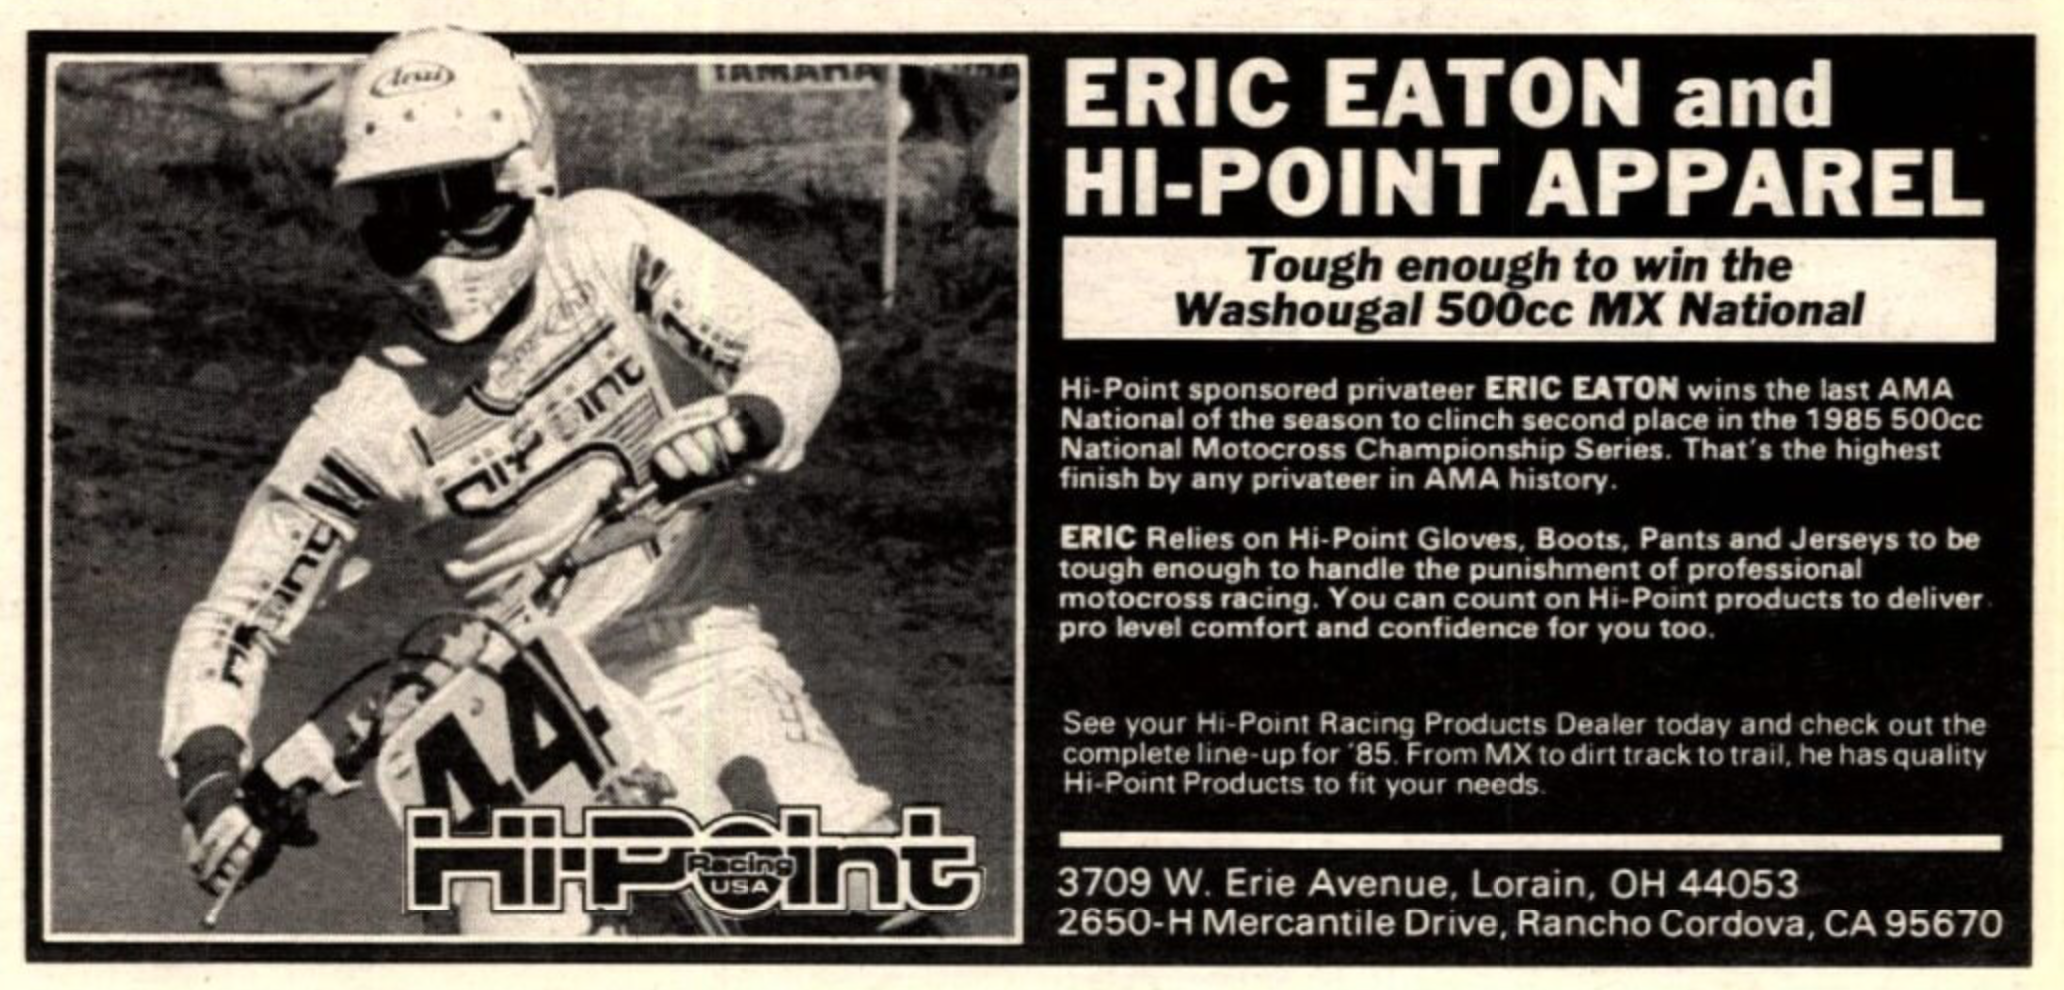 Eric Eaton